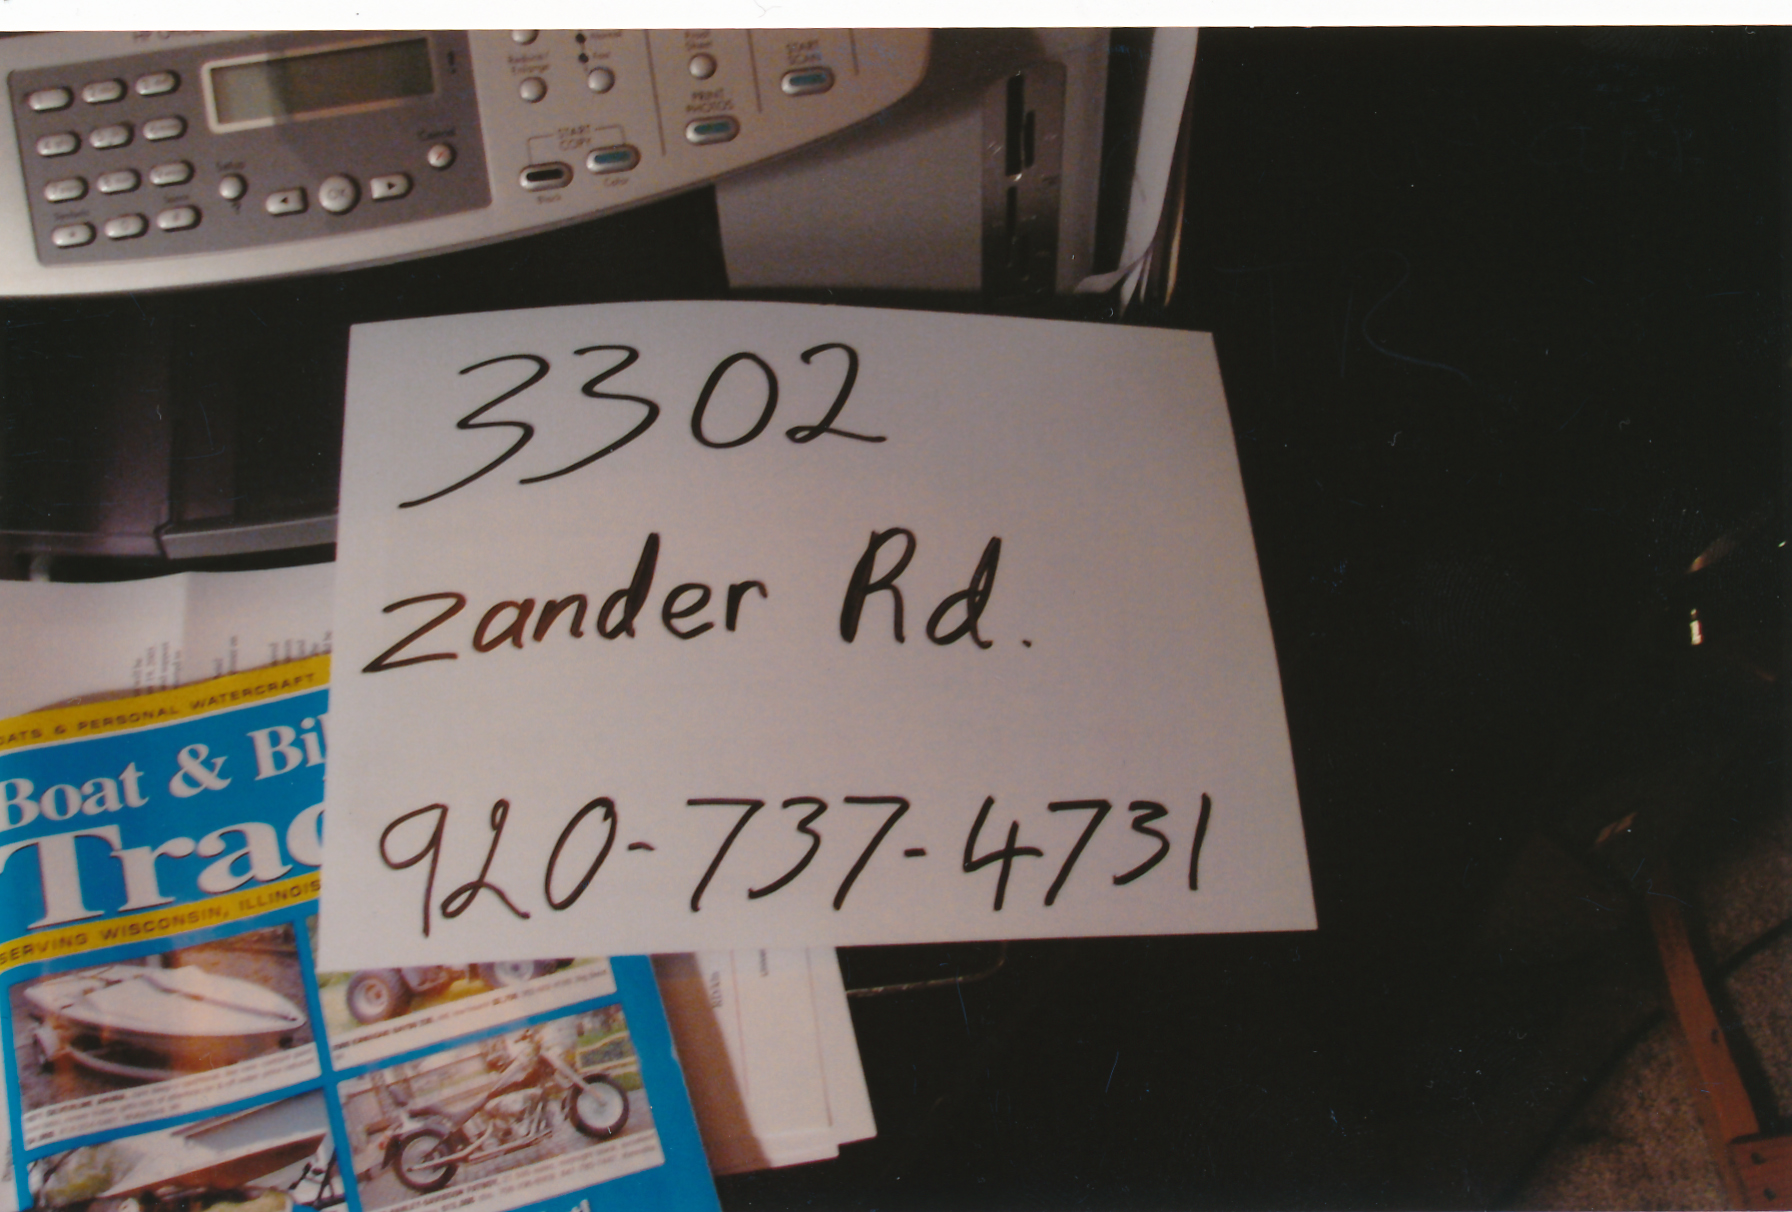 exhibit-149-sign-zander-road-2